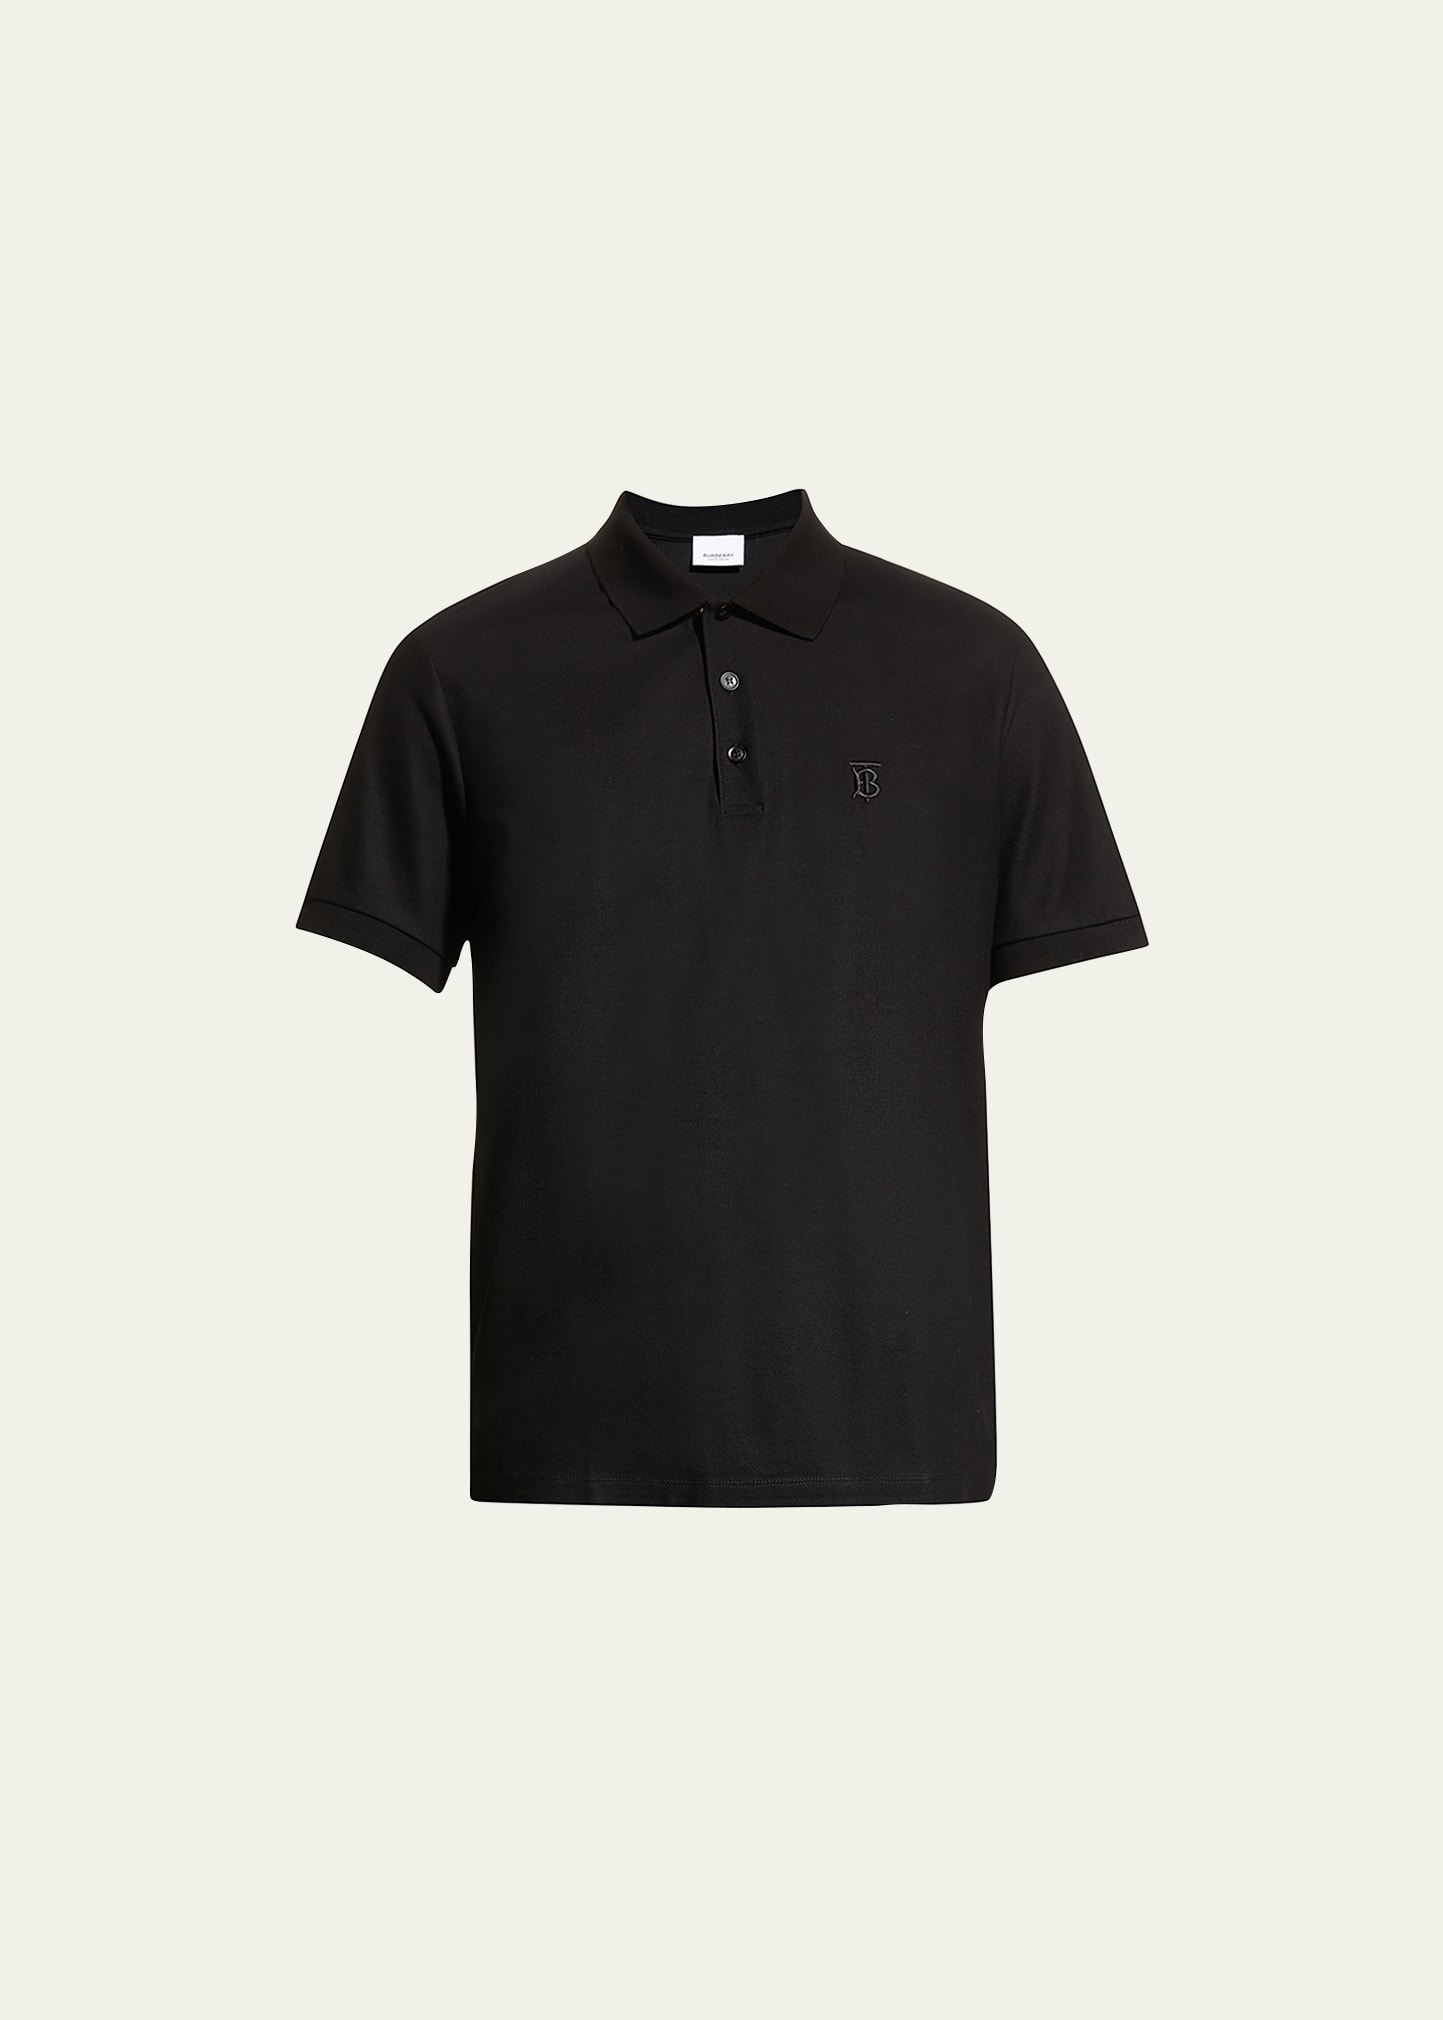 Burberry Men's Eddie Pique Polo Shirt, Black - Bergdorf Goodman